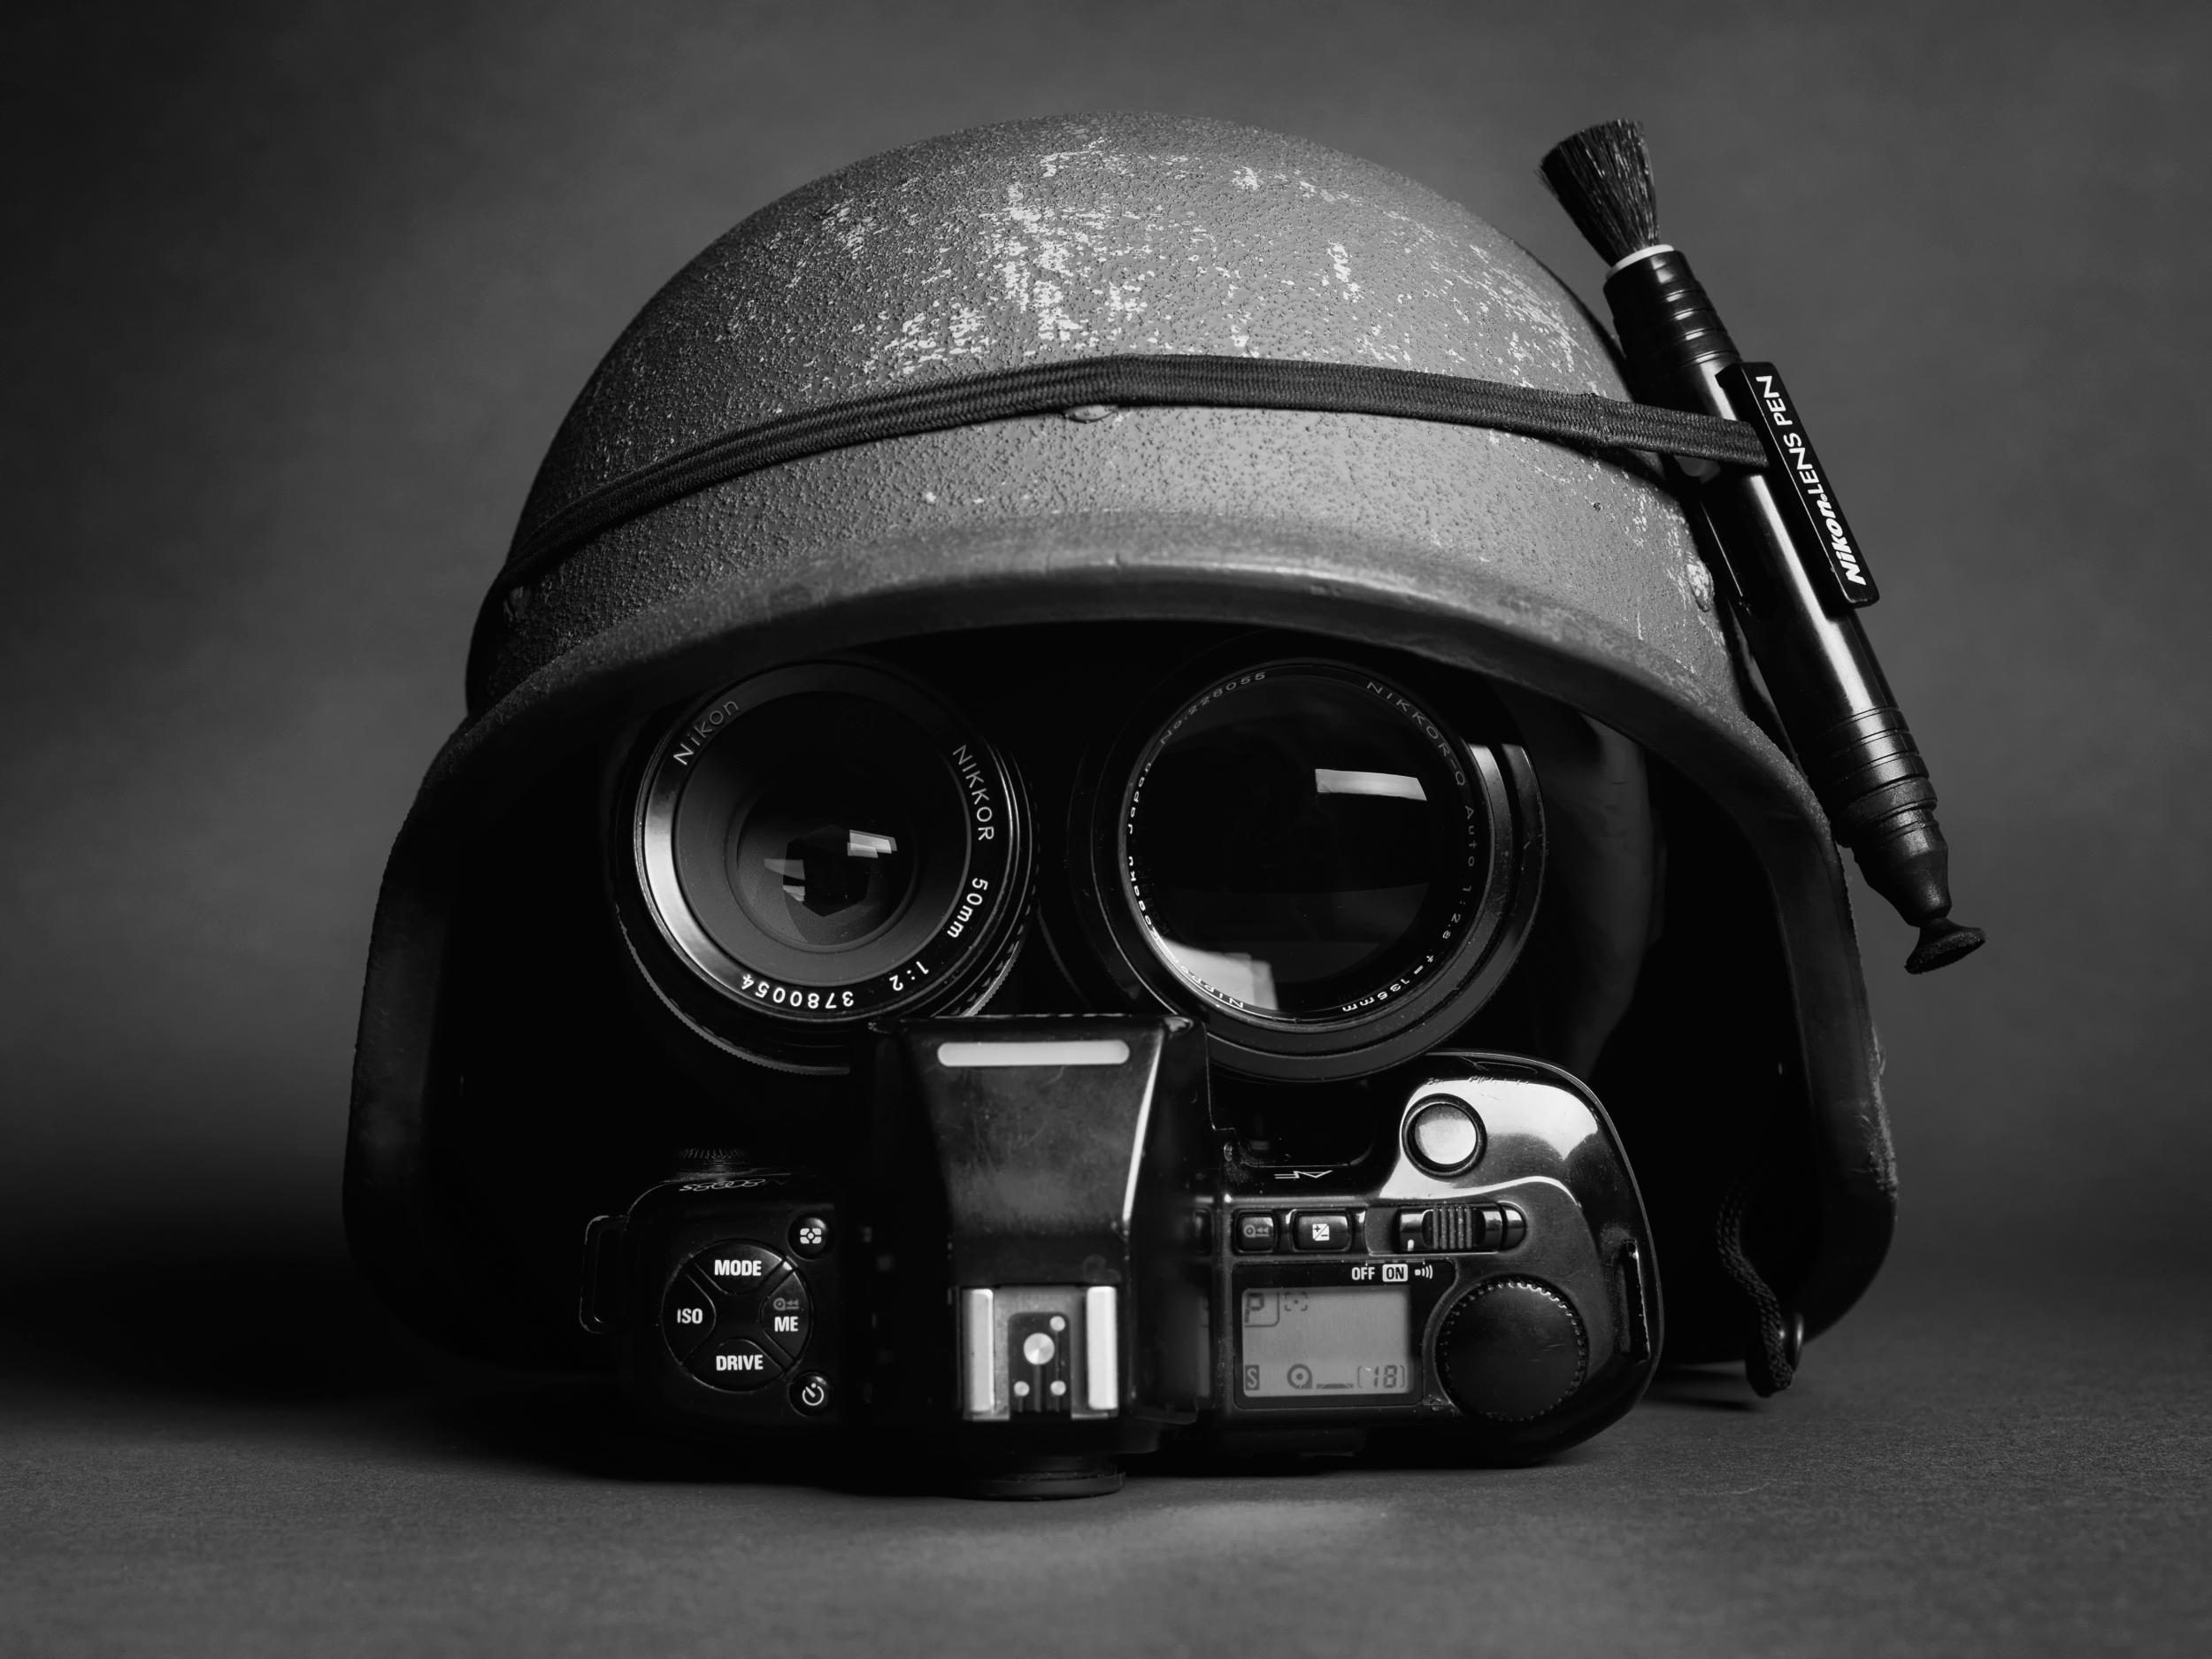 nikon, black, camera, black & white, man made, helmet, lens